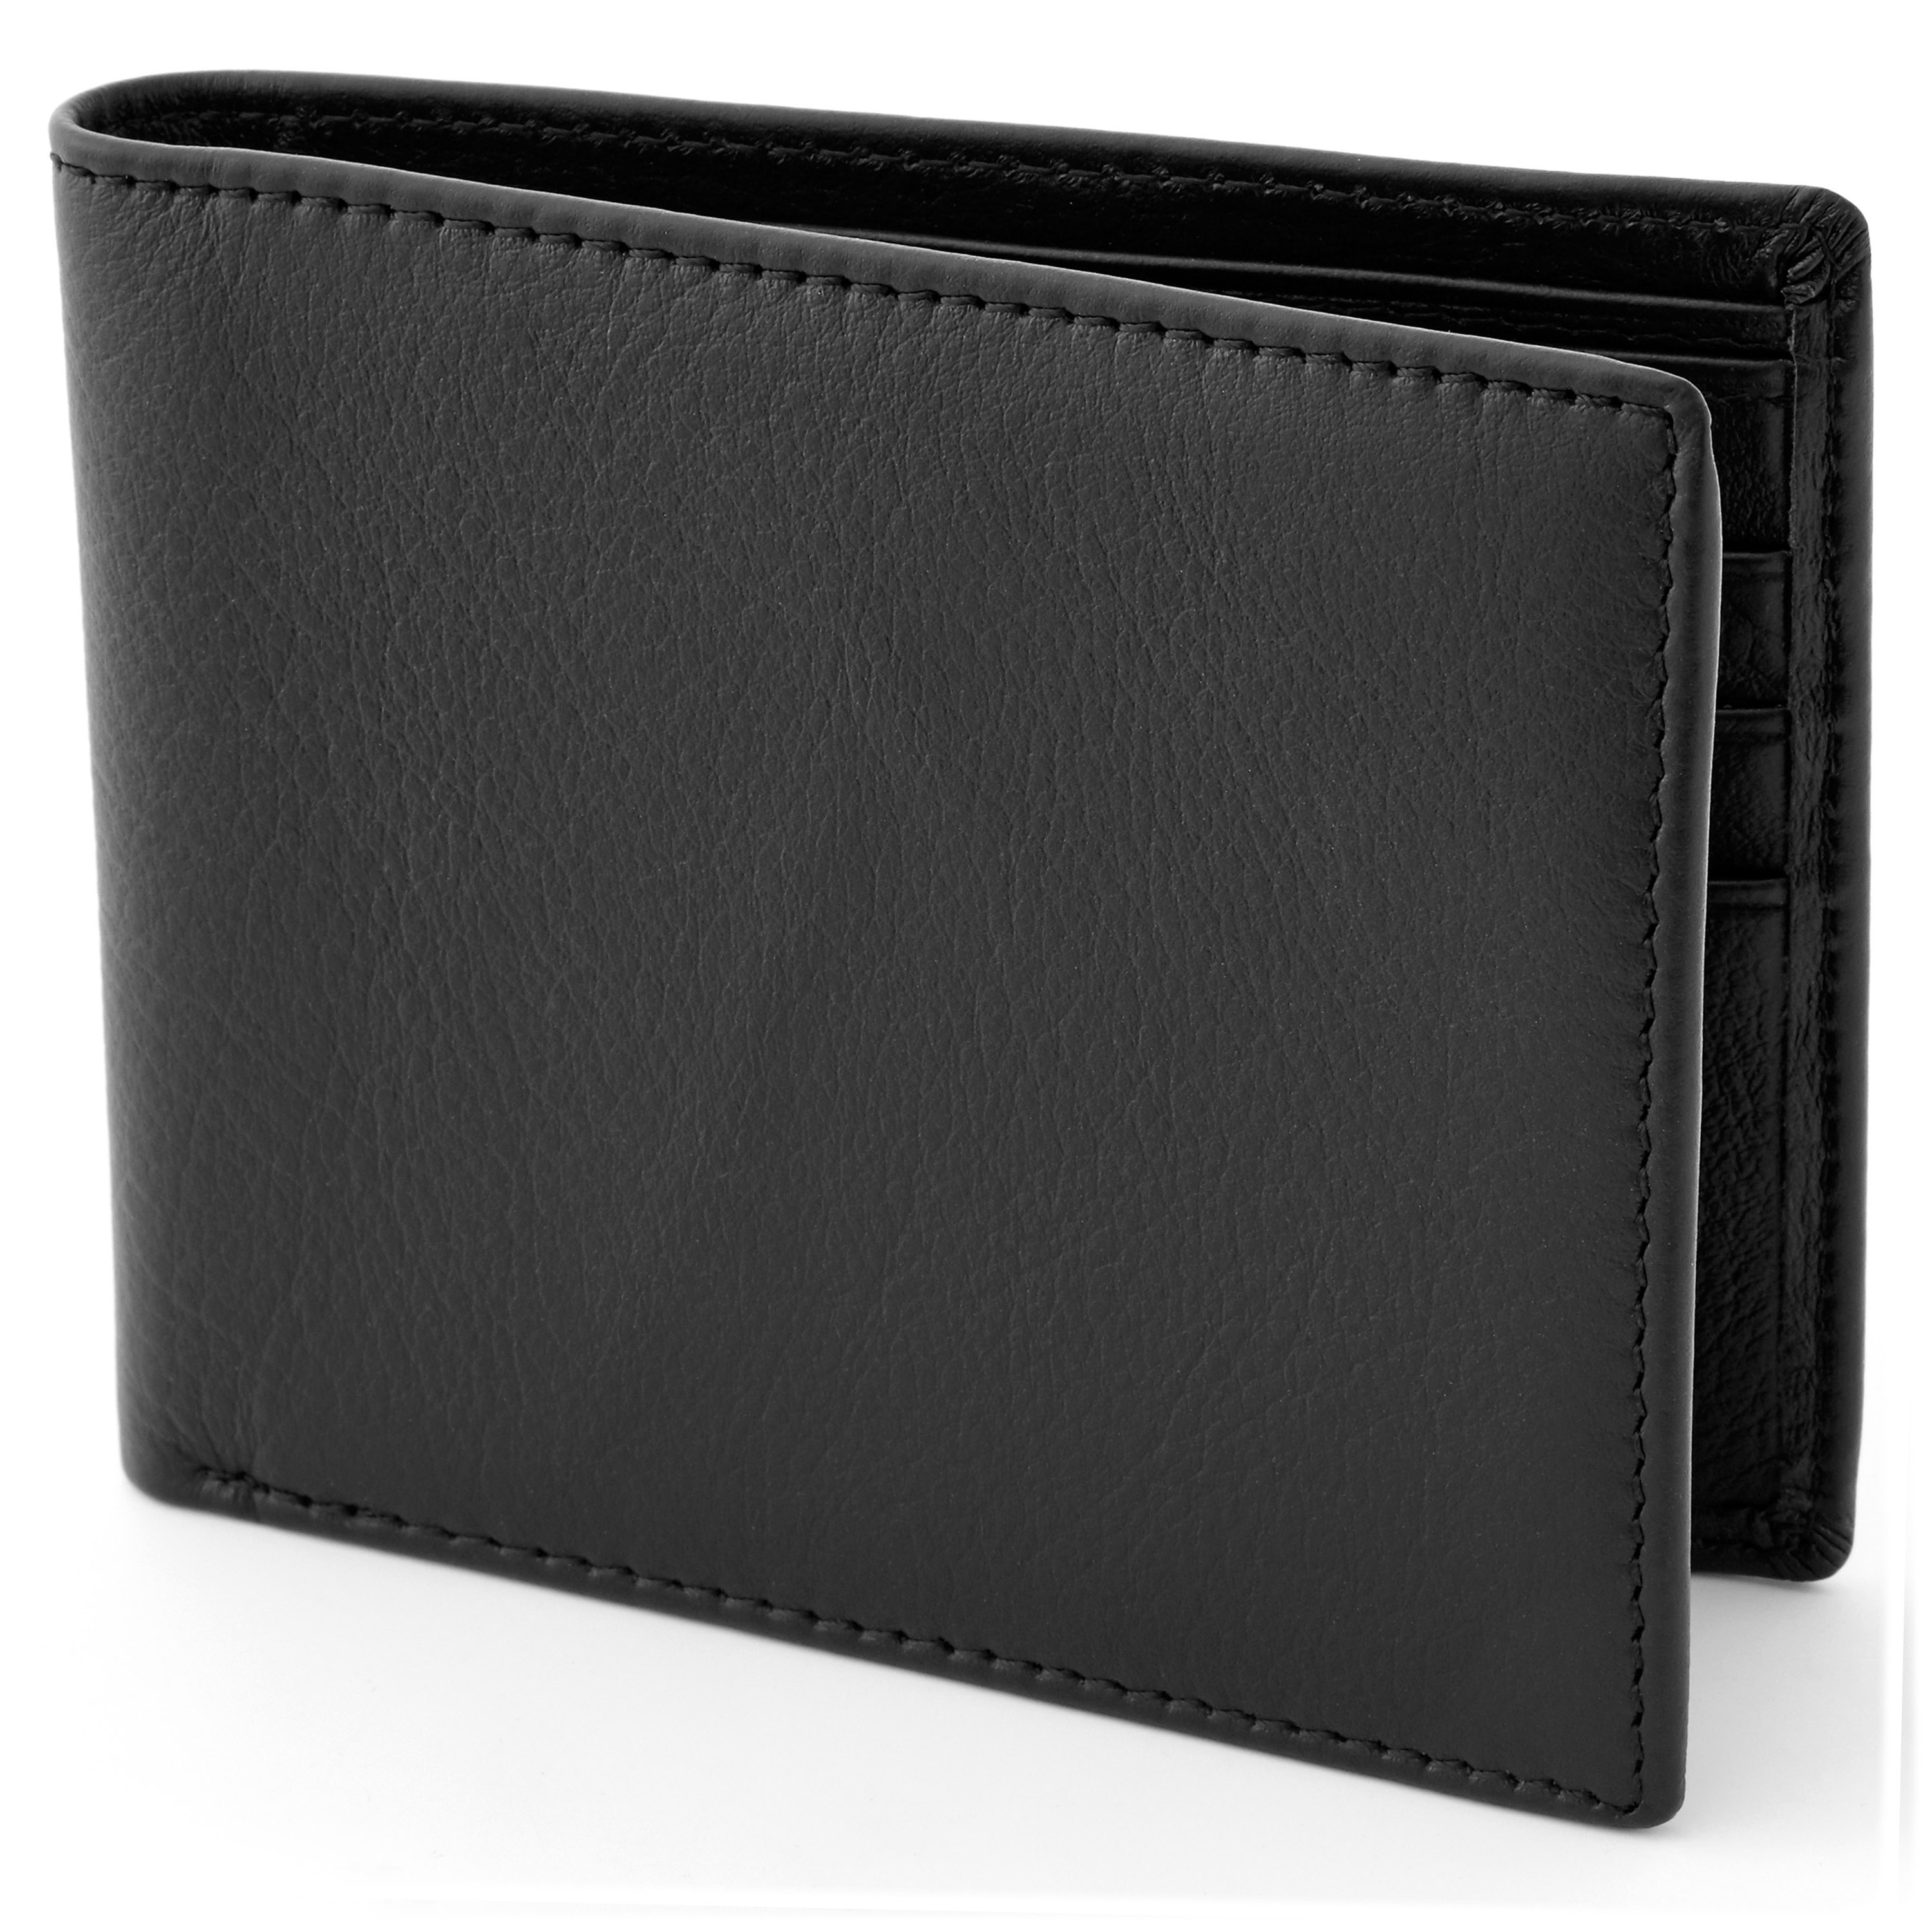 Basic Black Leather Wallet